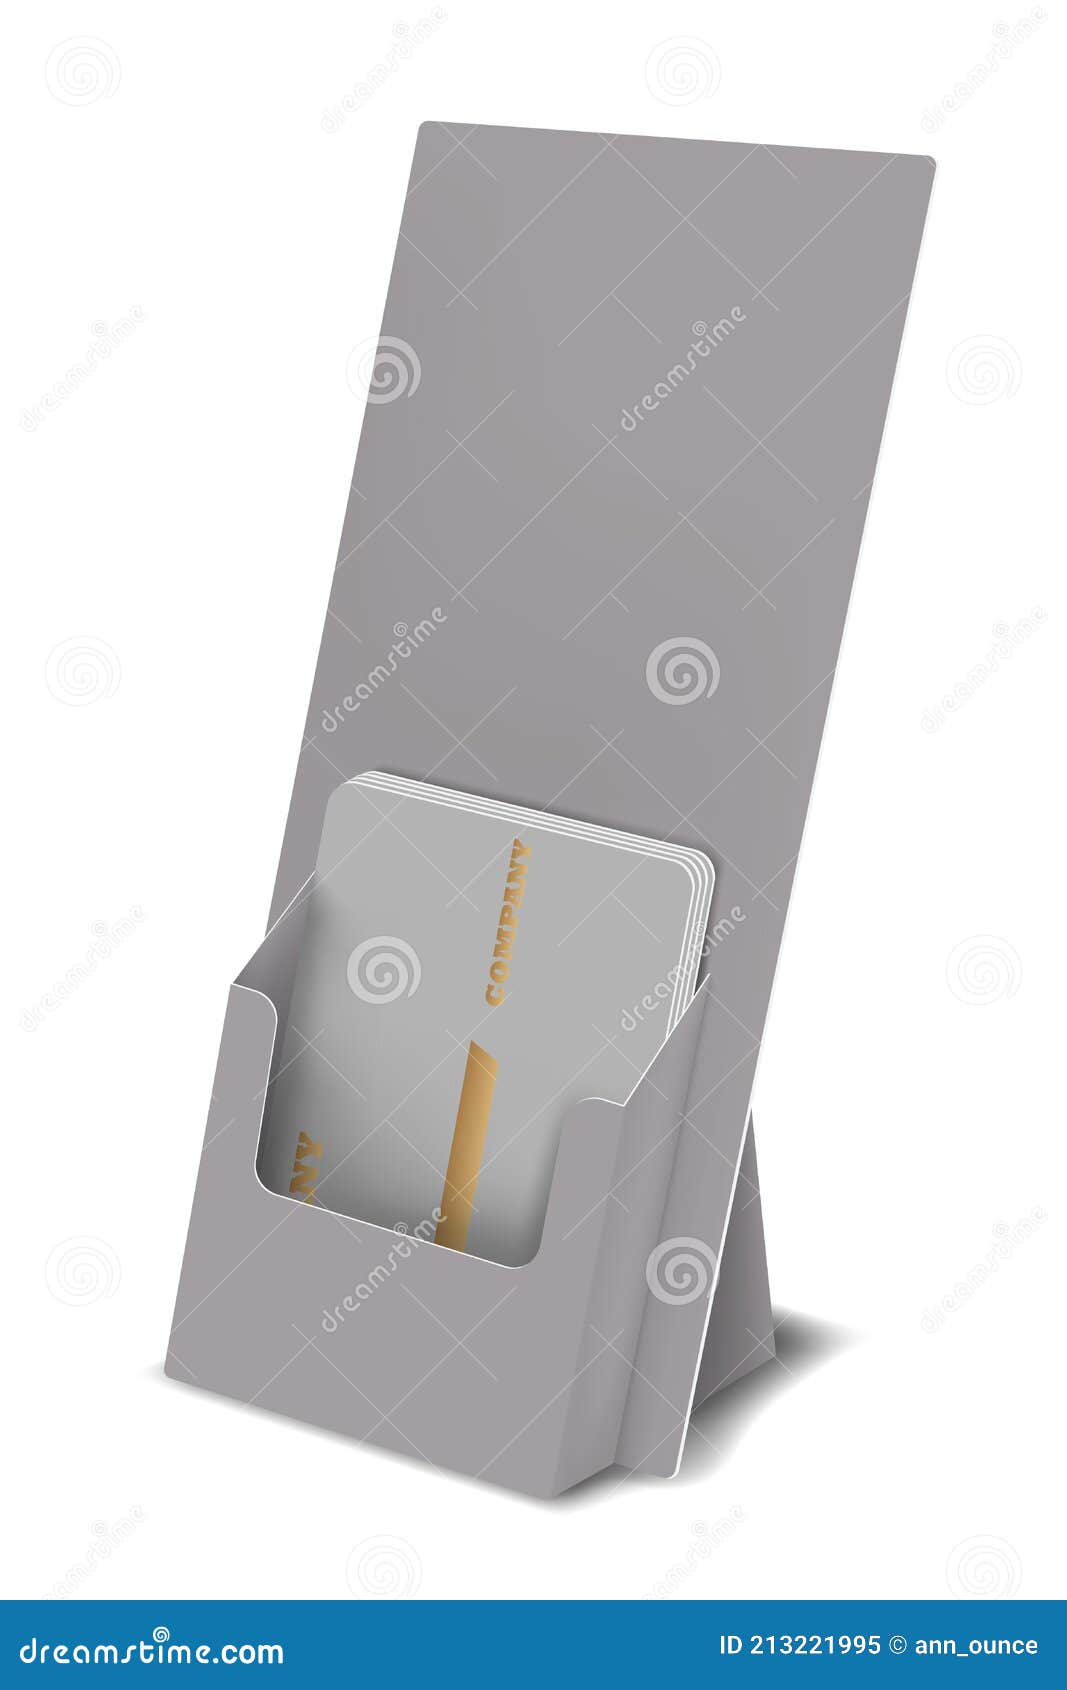 blank desk advertising dispenser with business cards inside, mock-up. table promotional material holder,  